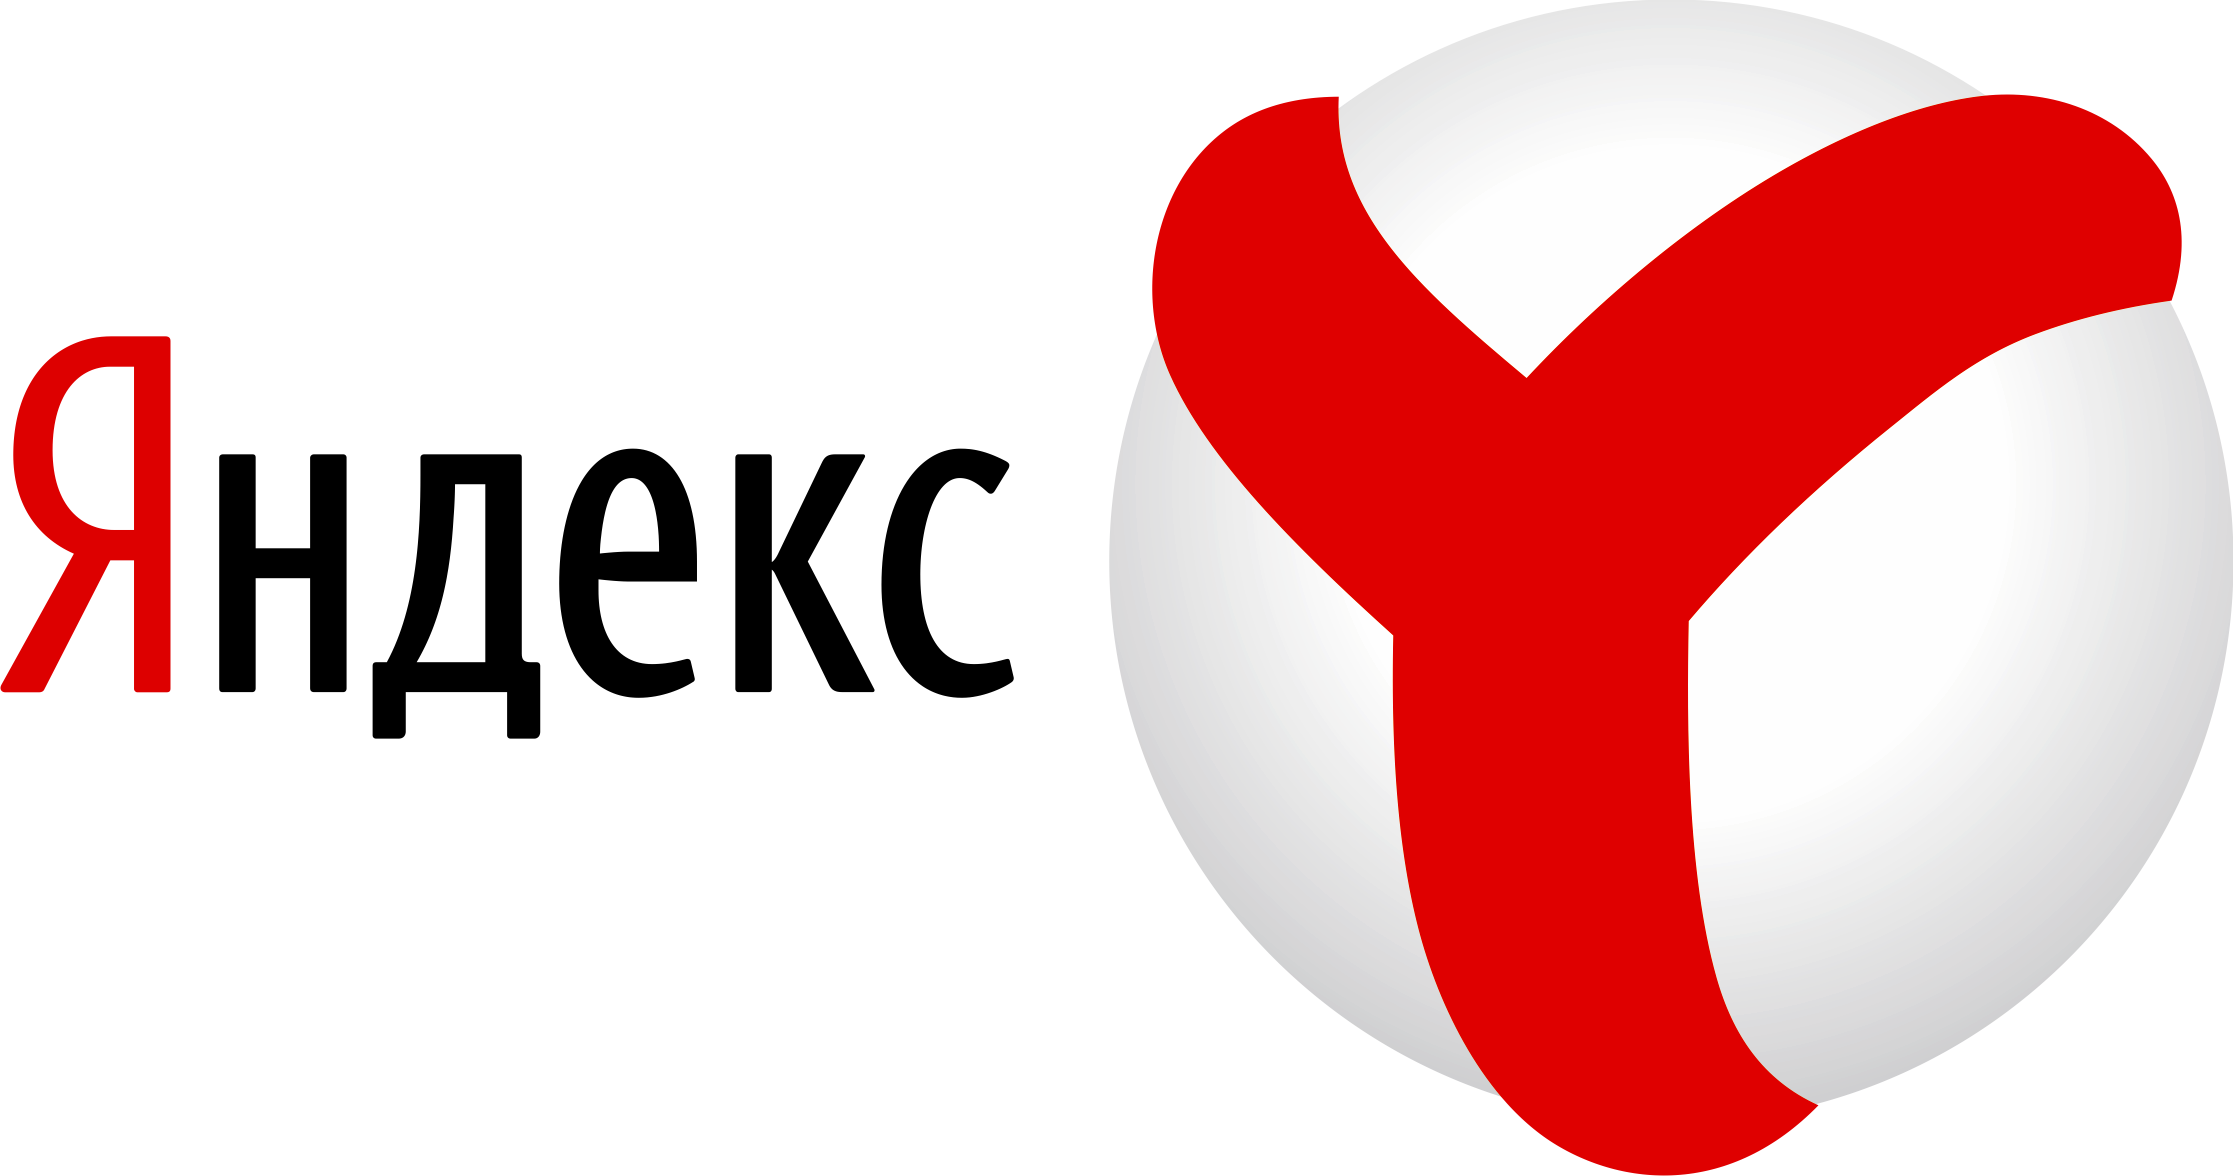 yandex logo